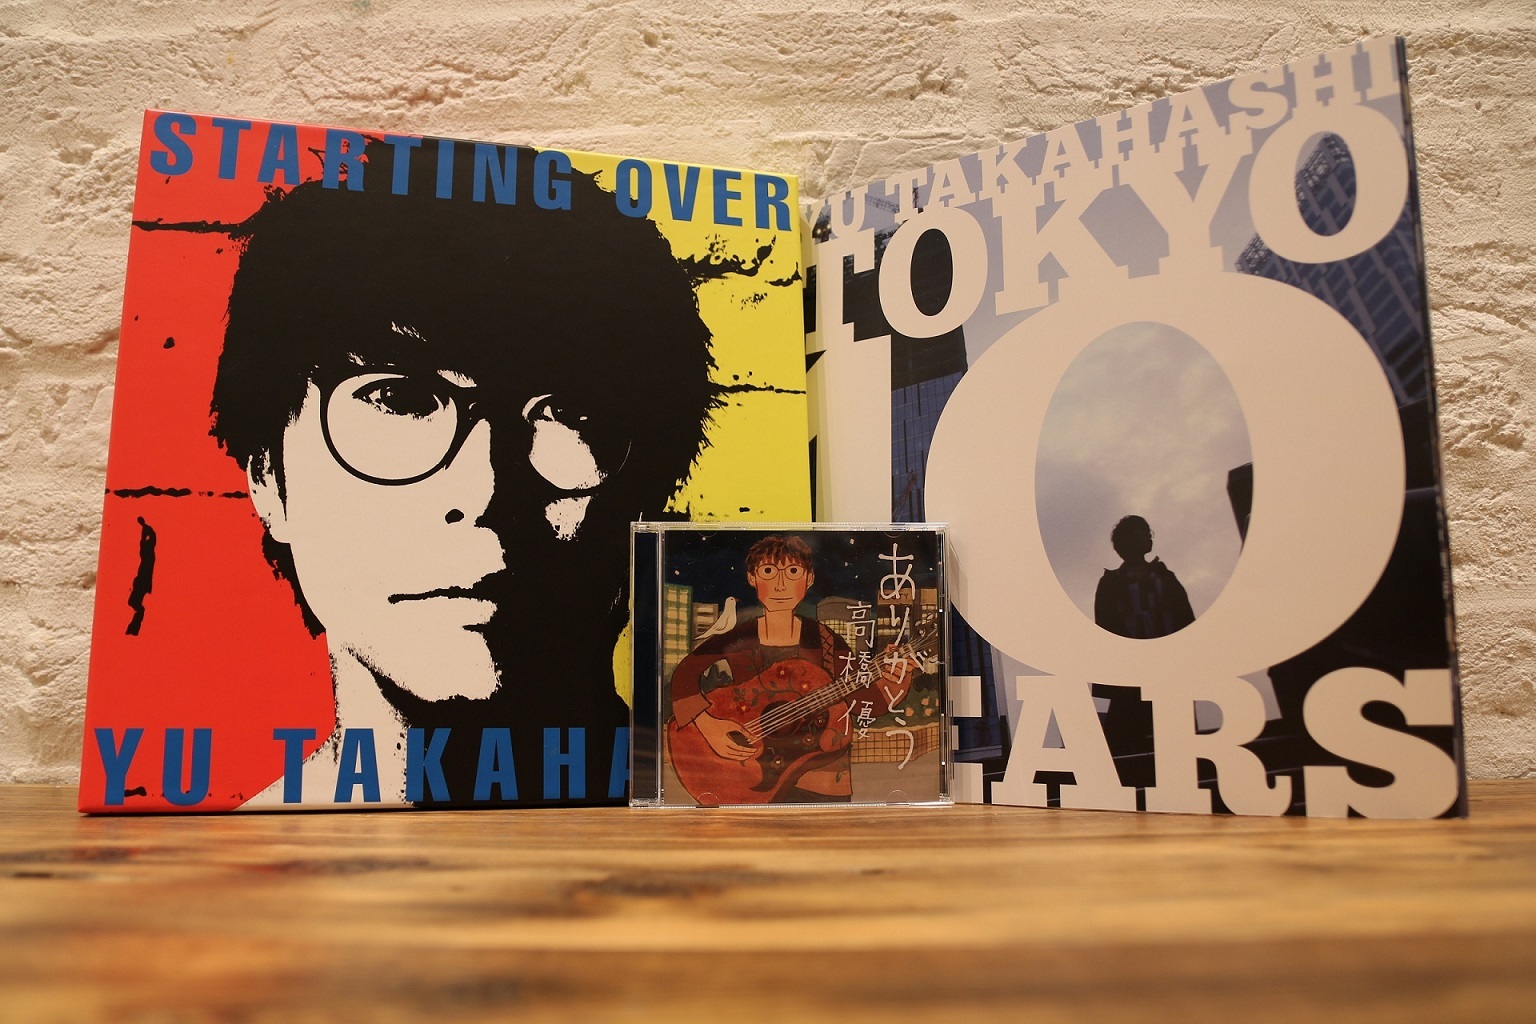 『STARTING OVER』の数量生産限定盤LPサイズボックスとLPサイズフォトブック“TOKYO 10Years”のサイズ比較写真